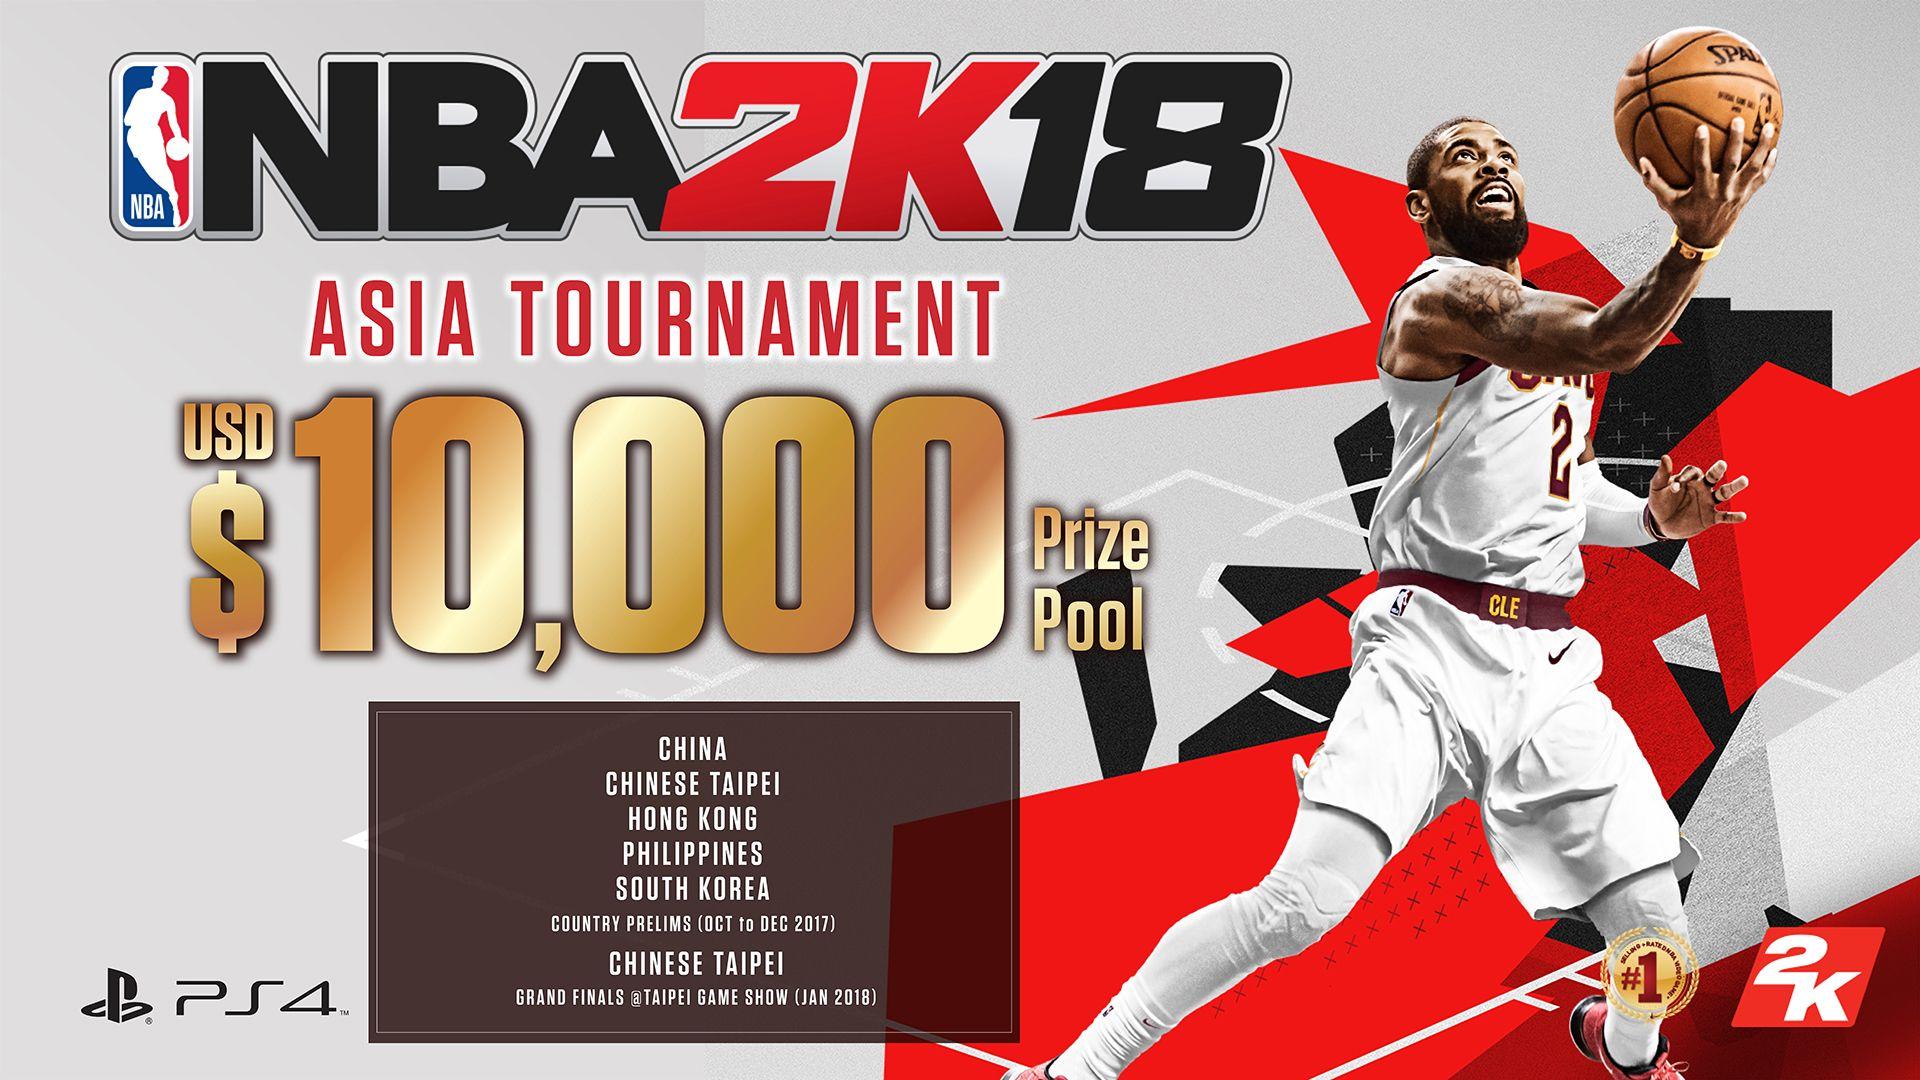 NBA 2K'S Asia Tournament Returns With NBA 2K18